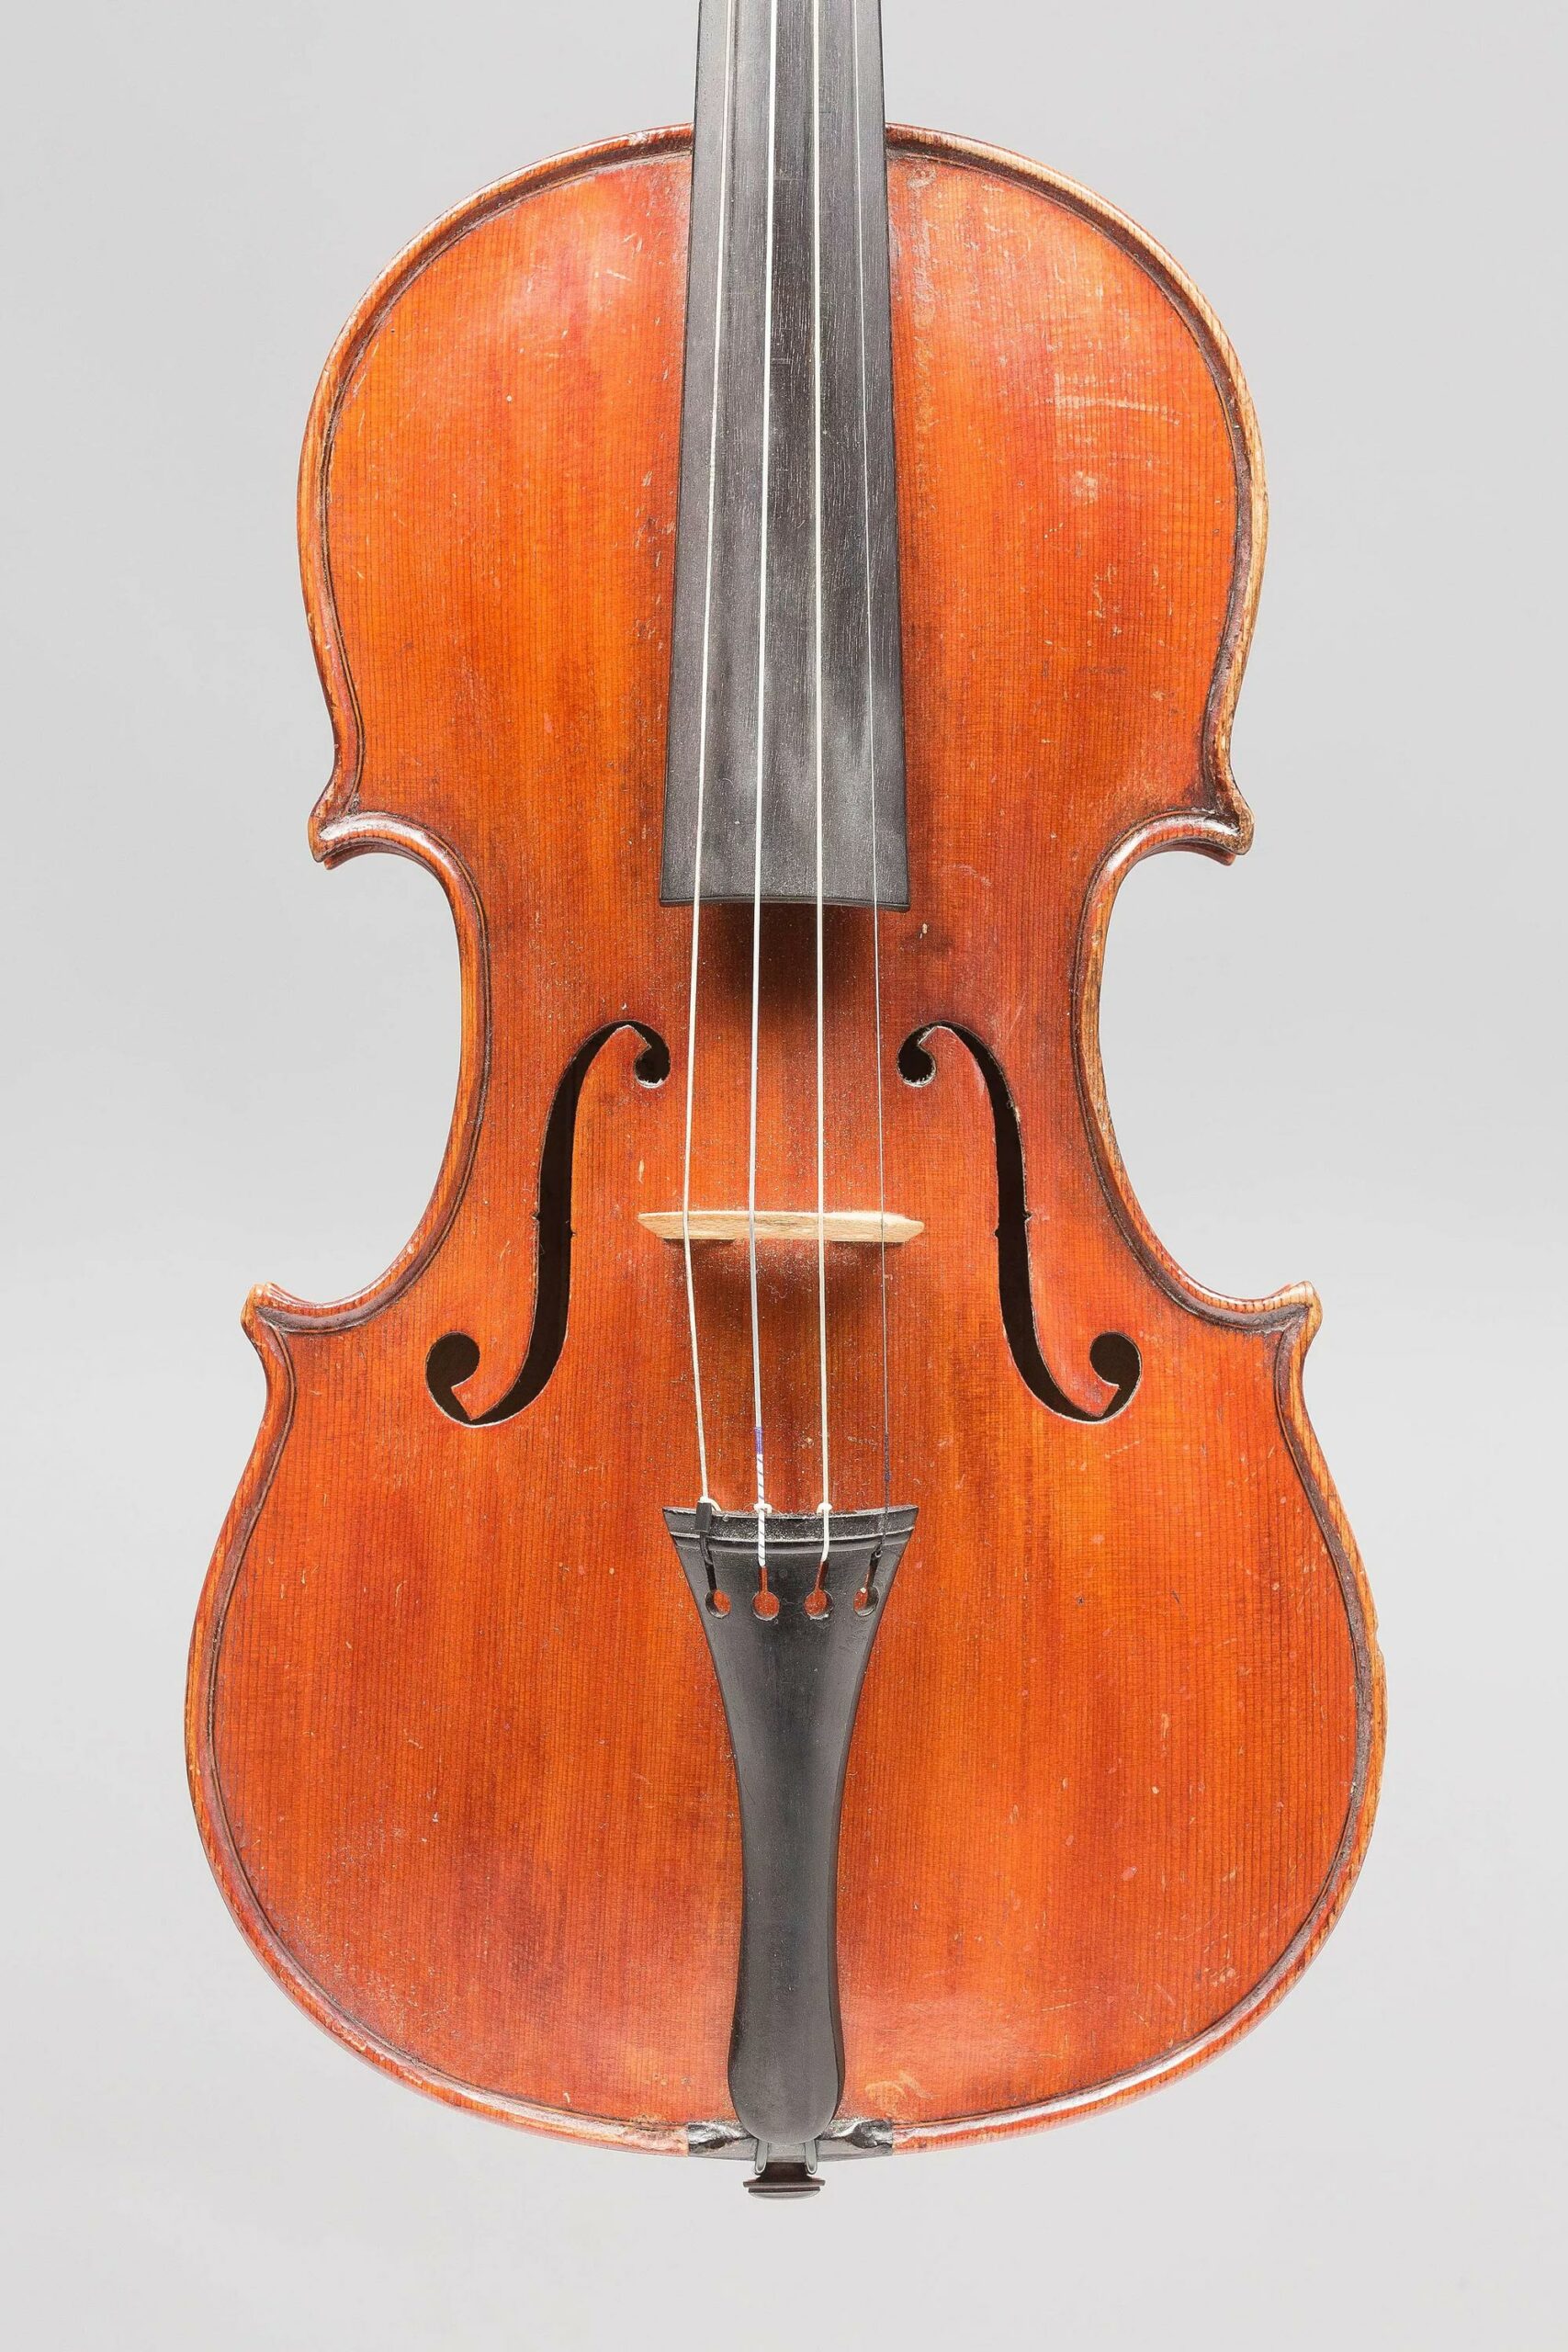 Violon de Gaetano GADDA Instrument mis en vente par Vichy Enchères le 6 décembre 2018 © C. Darbelet